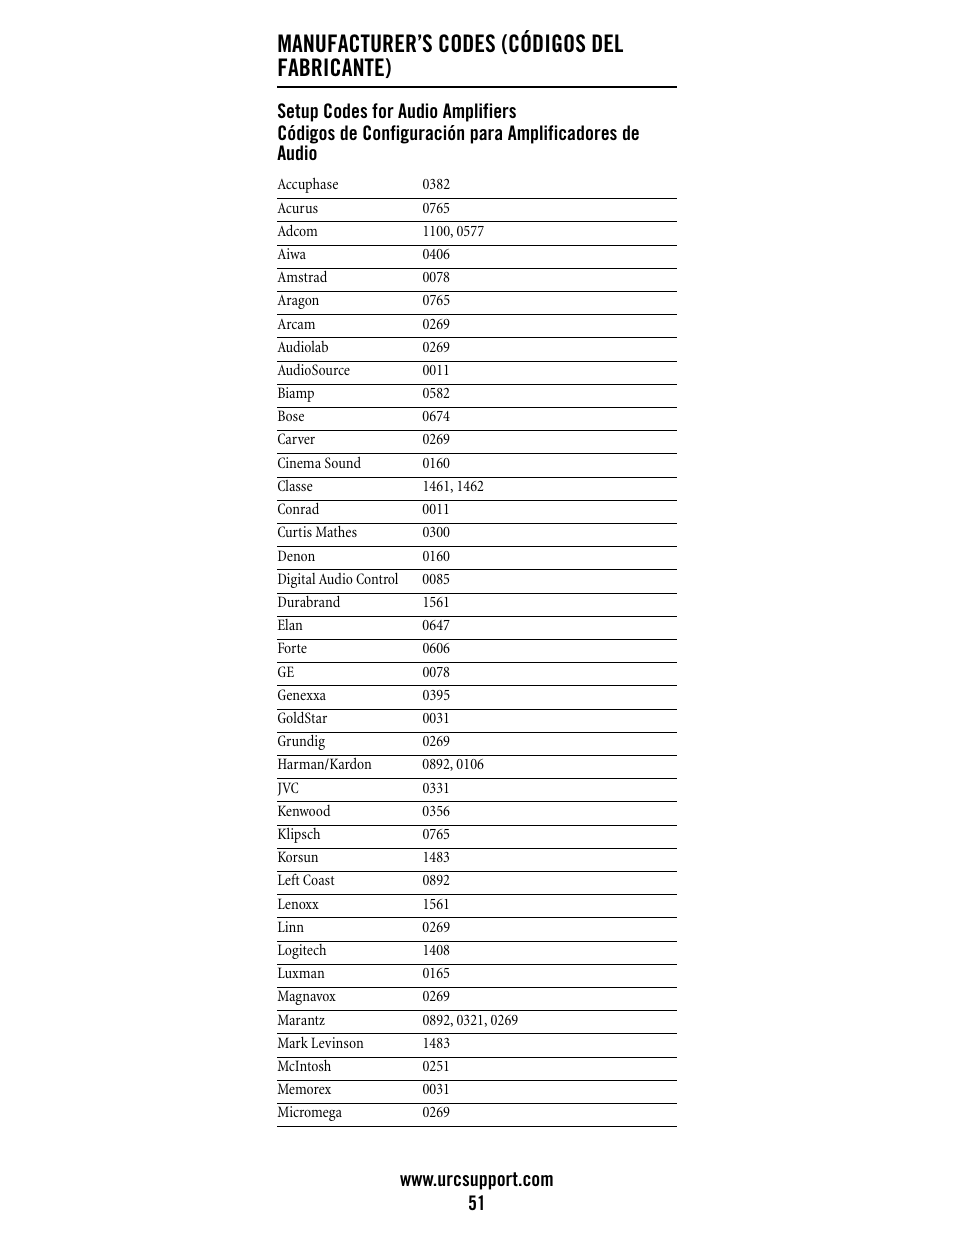 Manufacturer’s codes (códigos del fabricante) | Universal Electronics Atlas DVR/PVR 5-Device User Manual | Page 51 / 72